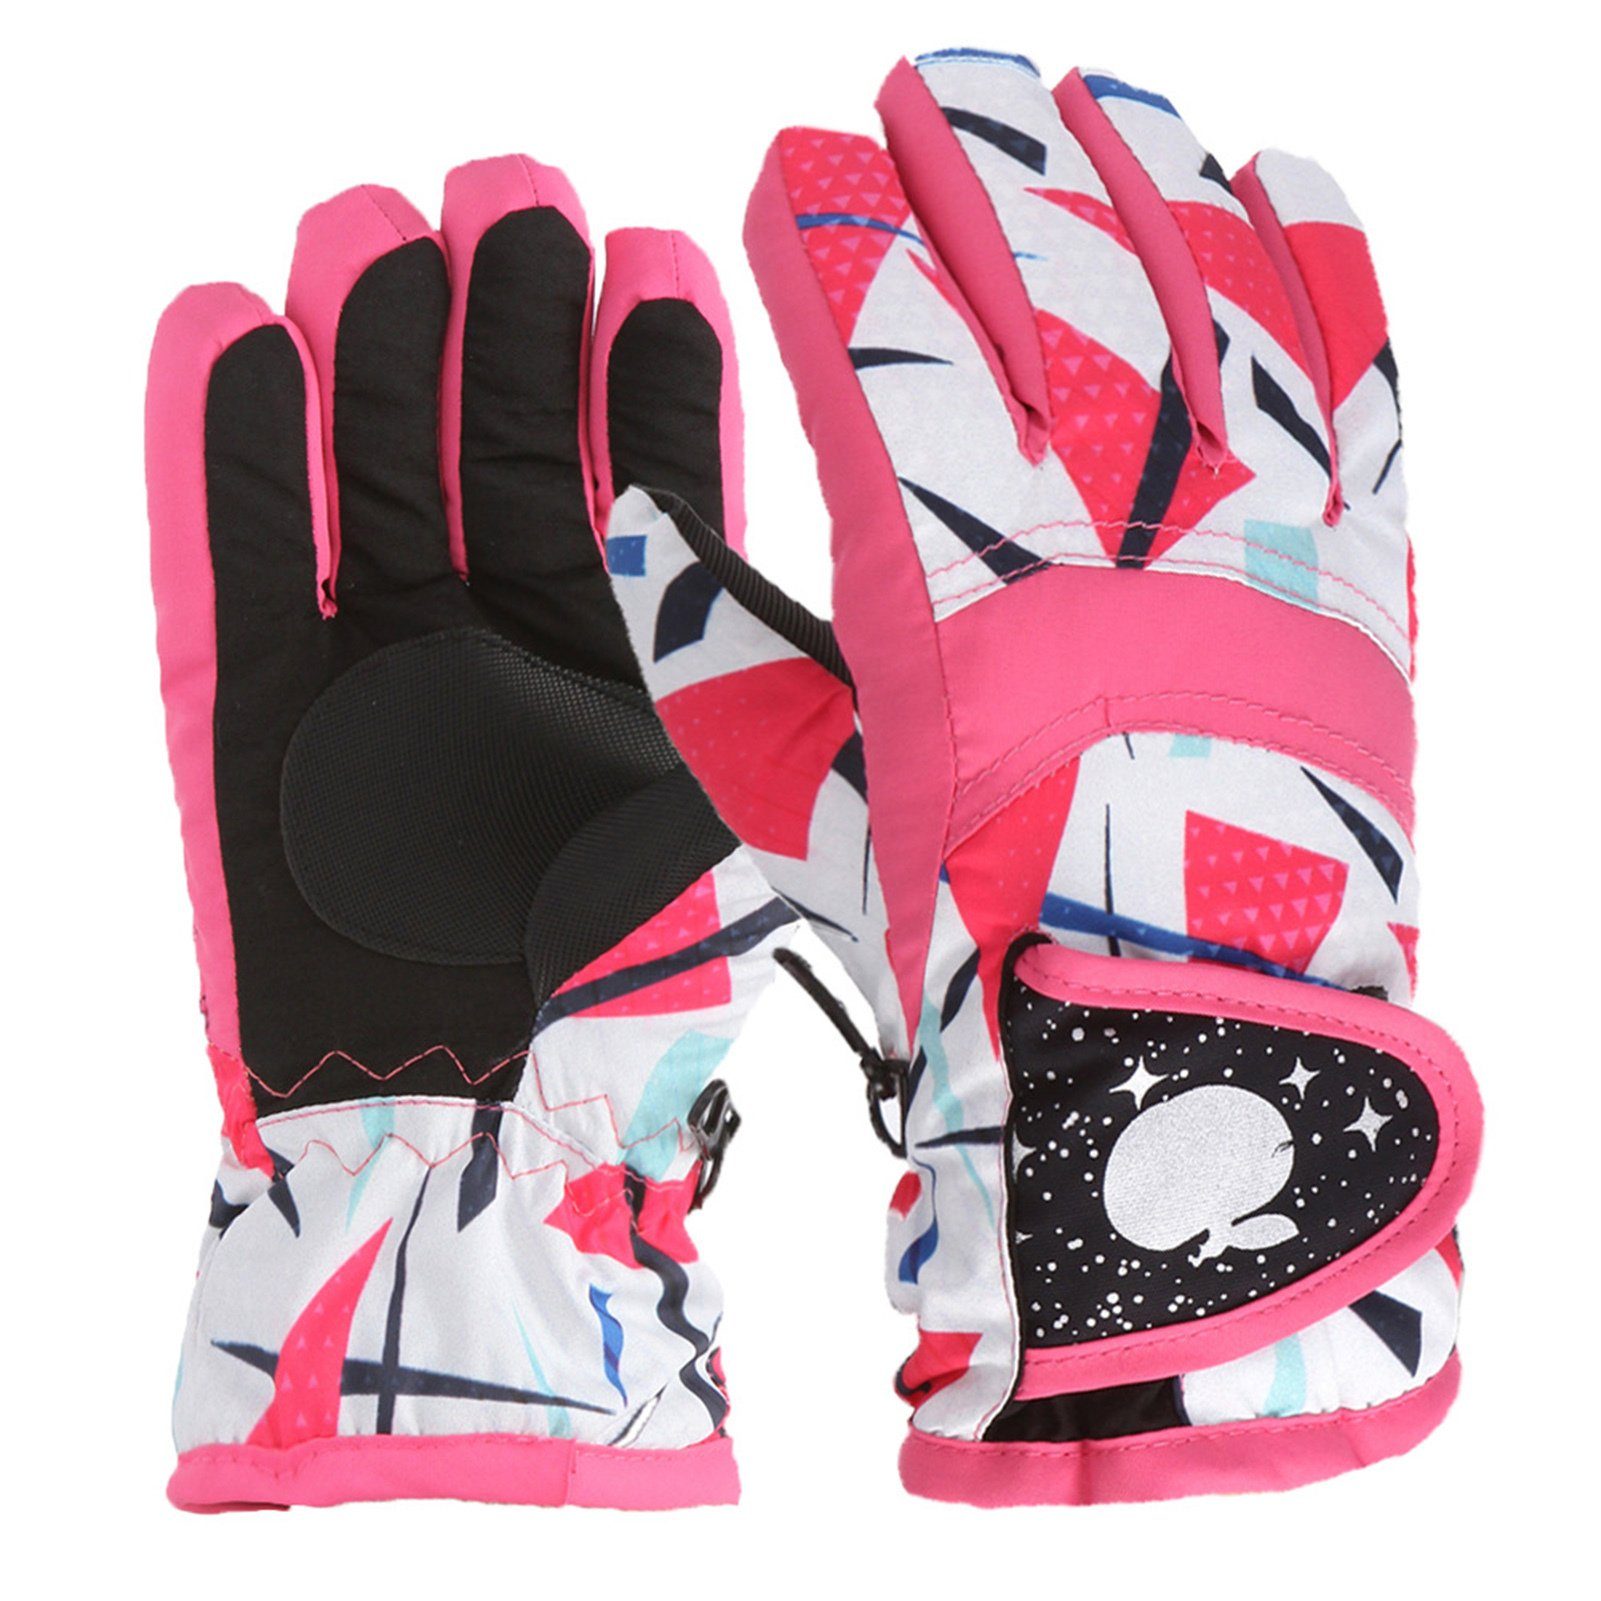 pink Mit Kinder-Skihandschuhe Skihandschuhe Handschuhe Für Cartoon-Muster, Blusmart Bequeme